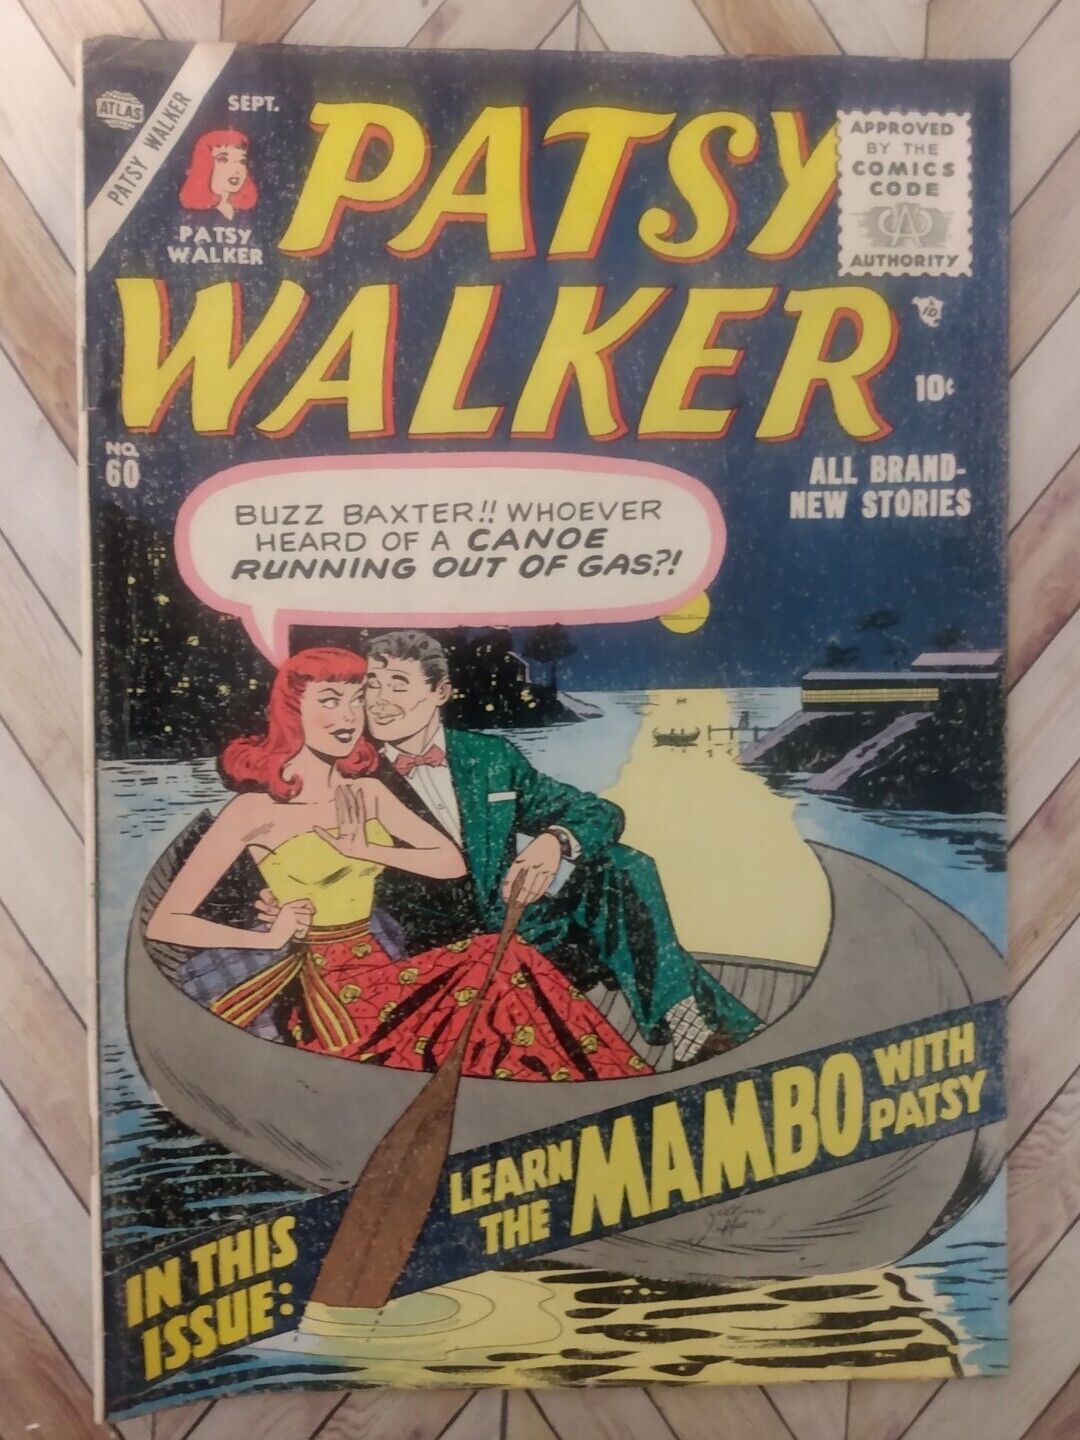 Patsy Walker Atlas Comics Sept 1955 Vol. 1 Number 60 Mambo with Patsy AL JAFFEE